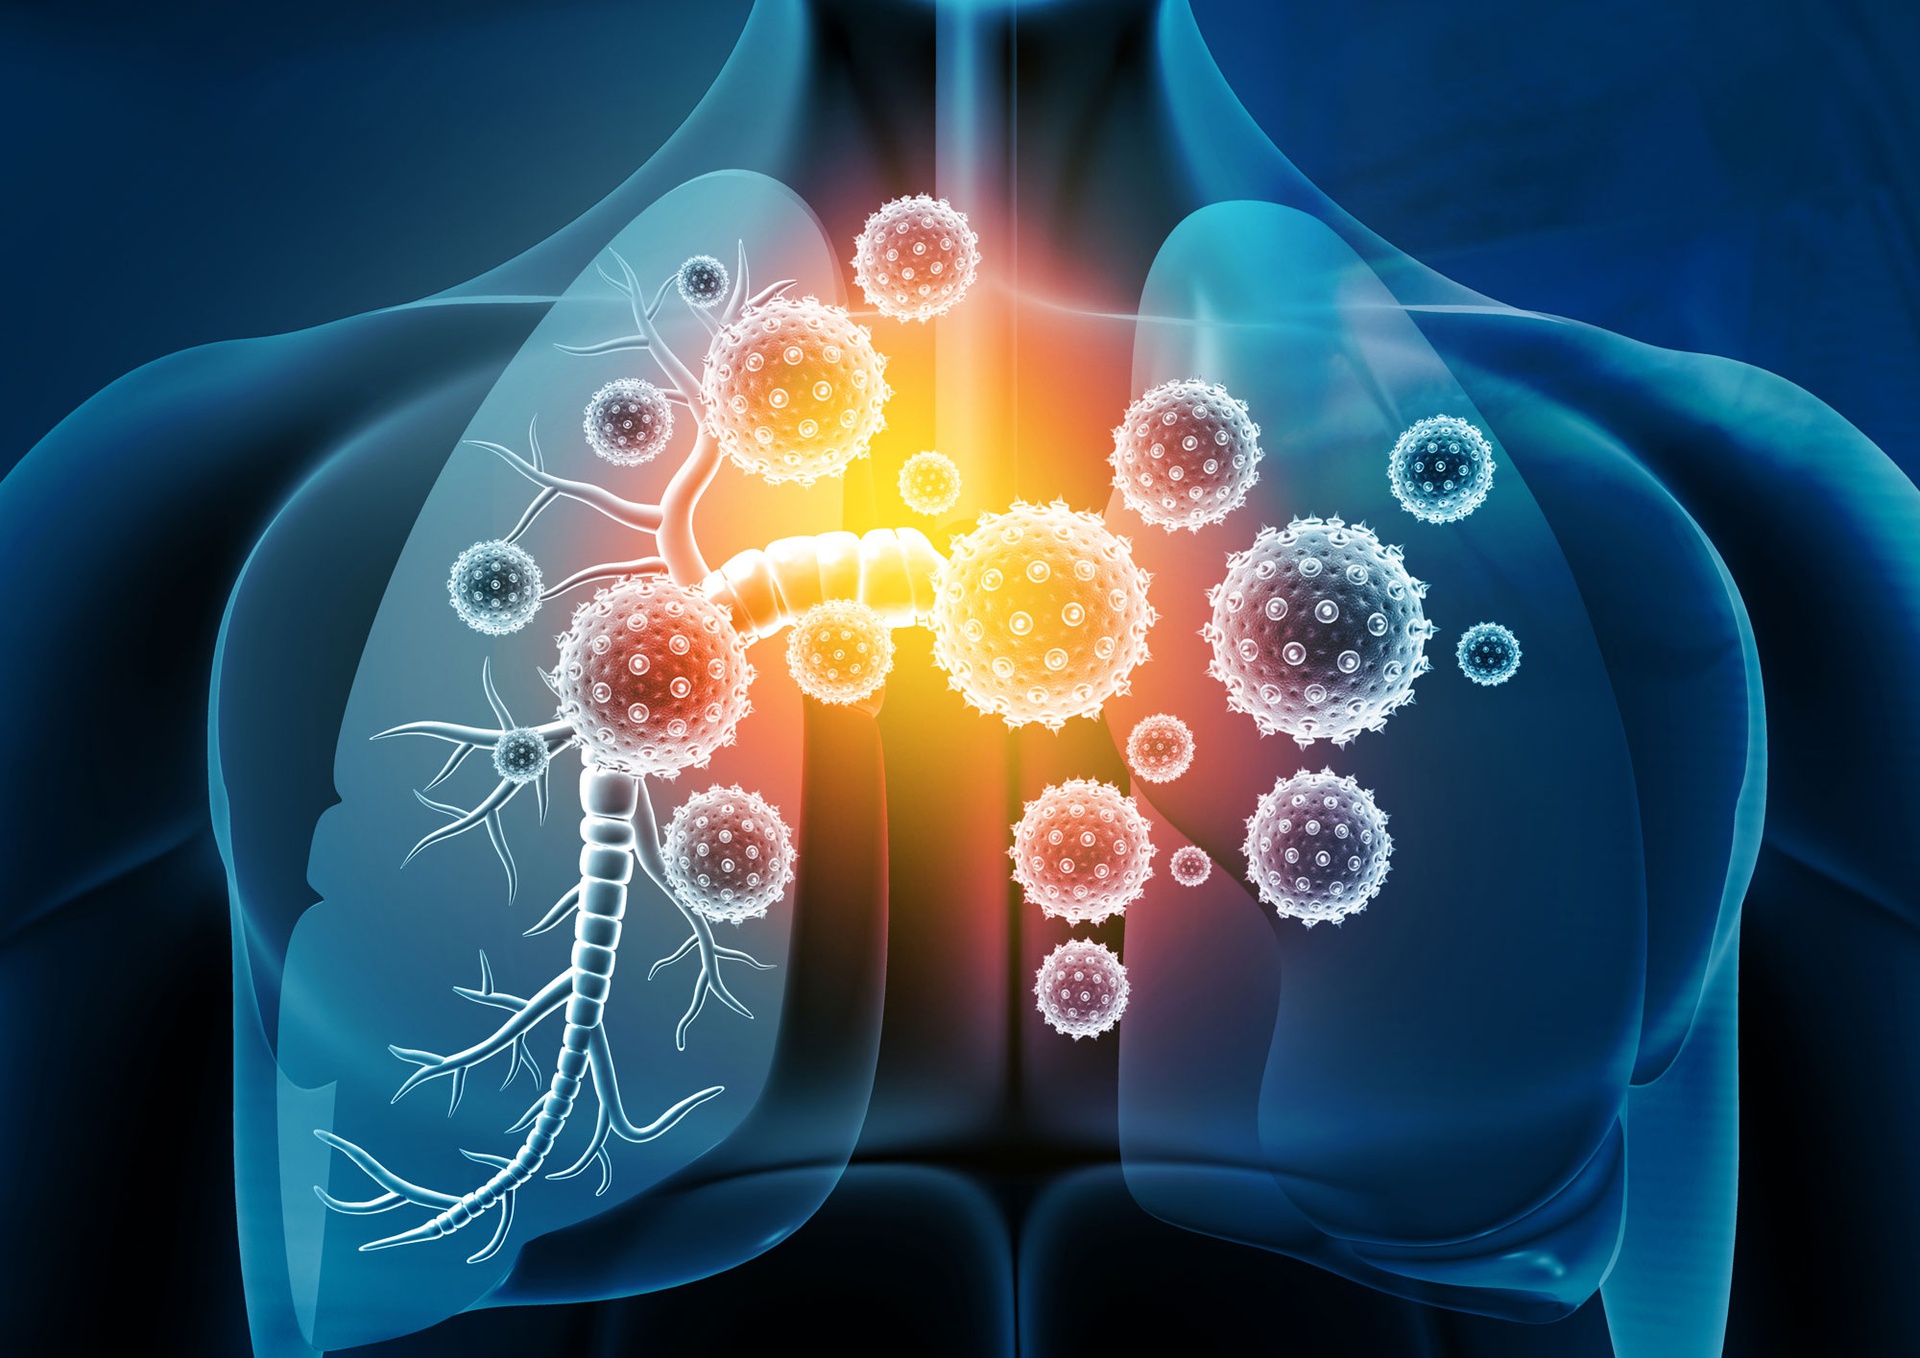 Infections respiratoires et toux